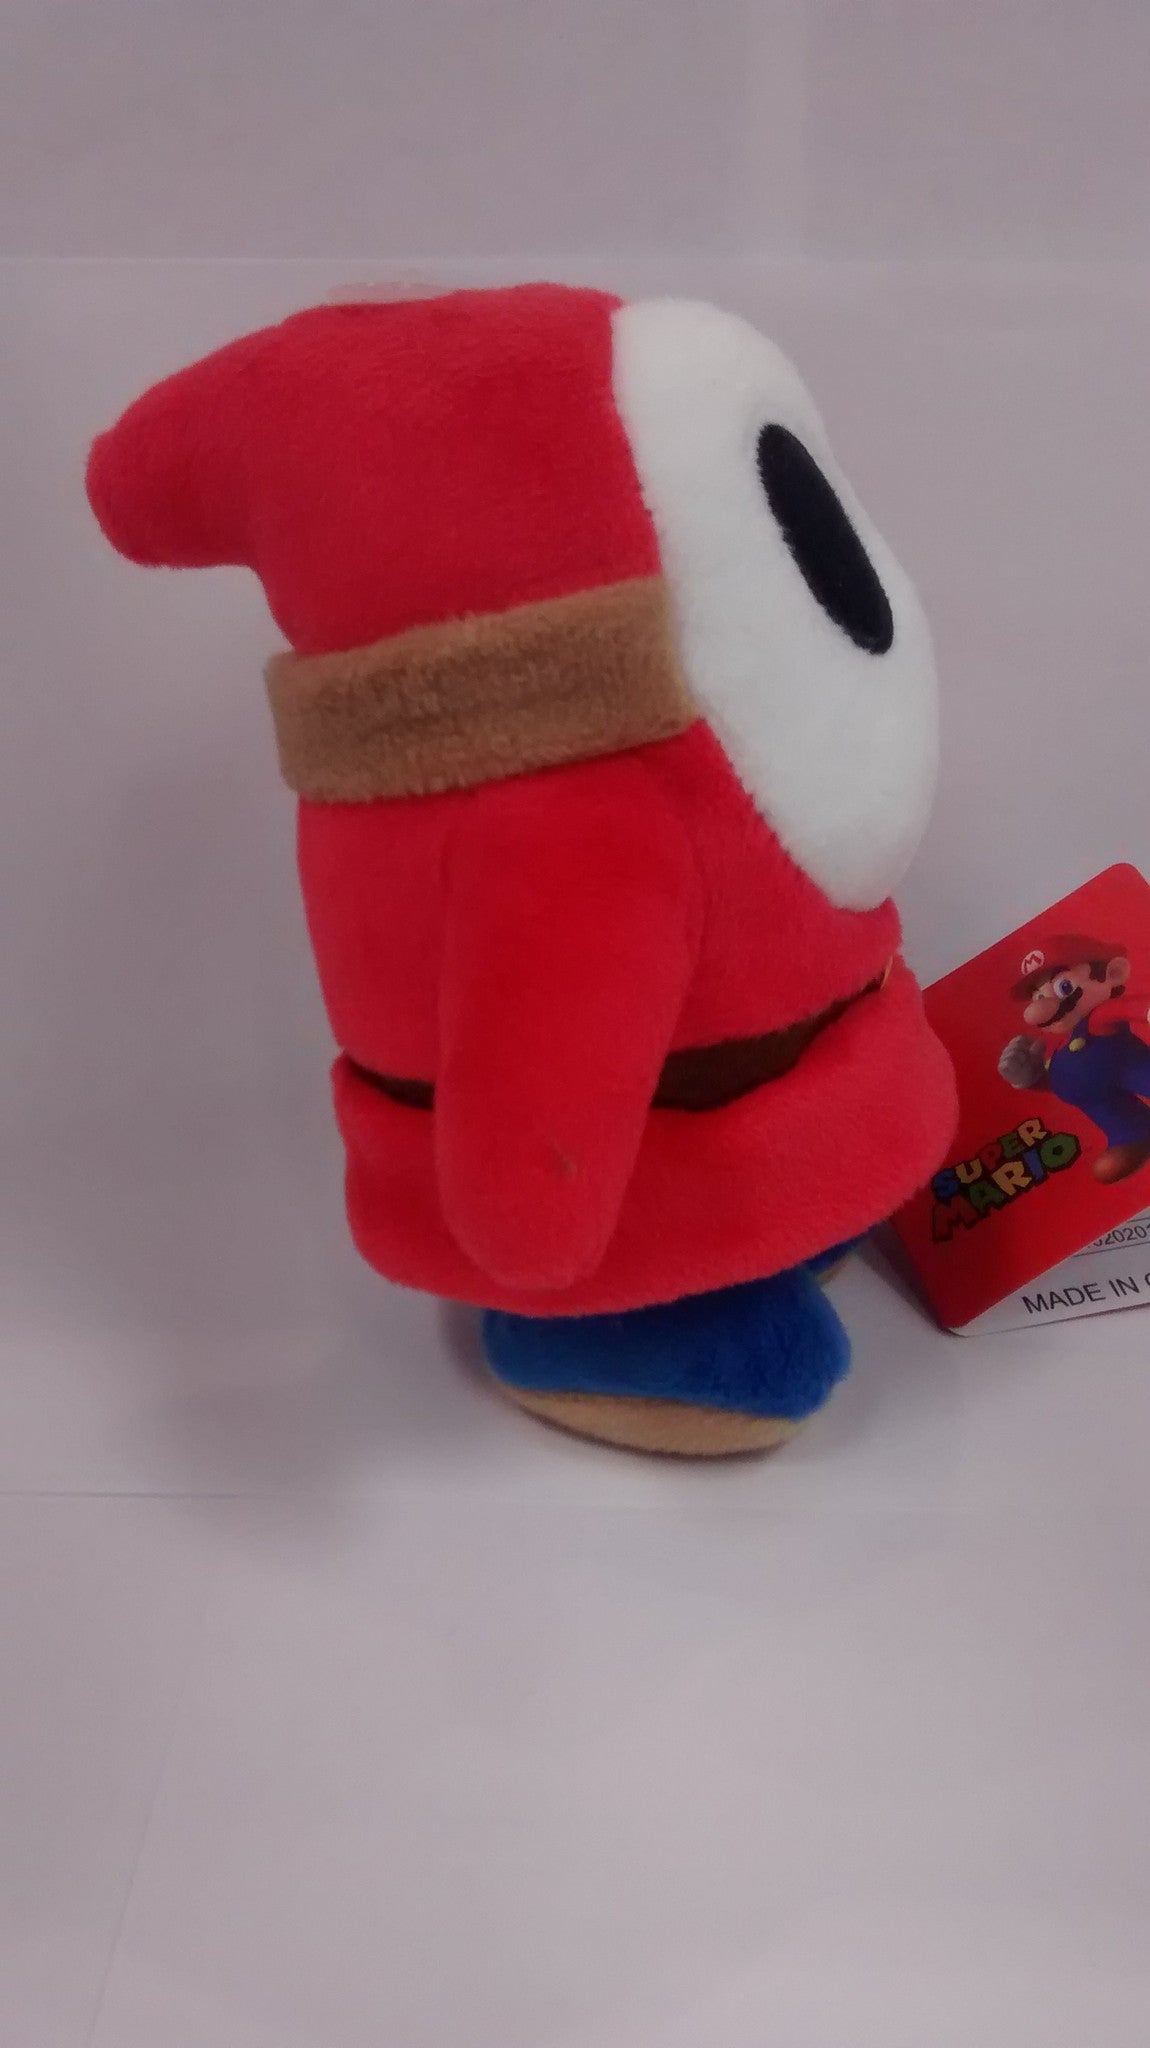 Super Mario Bros.: Shy Guy 5" Plush